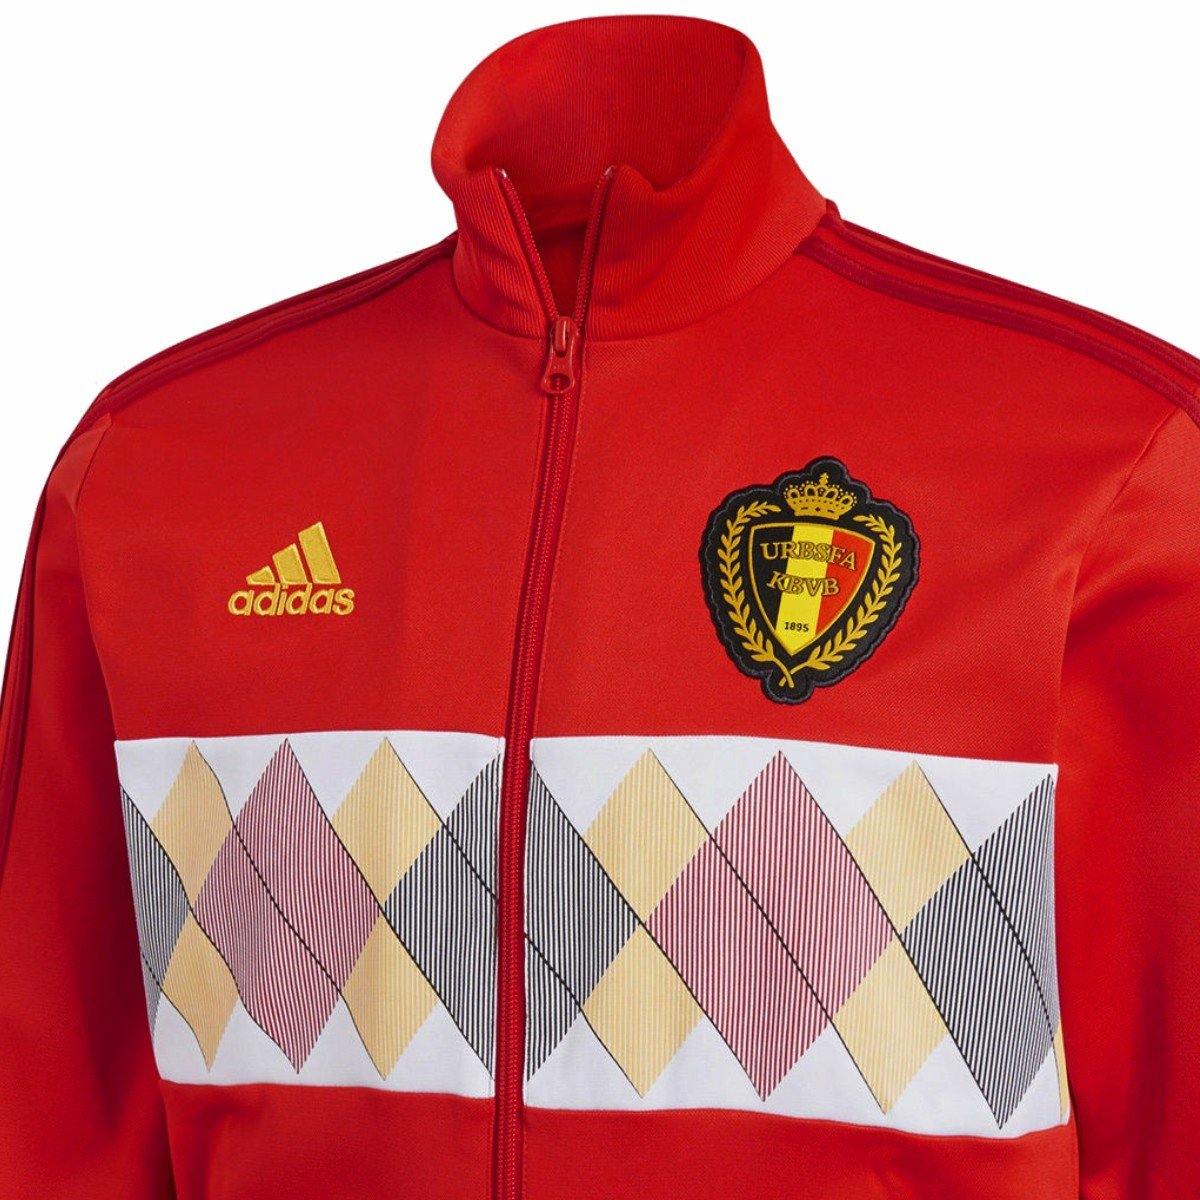 adidas belgium jacket